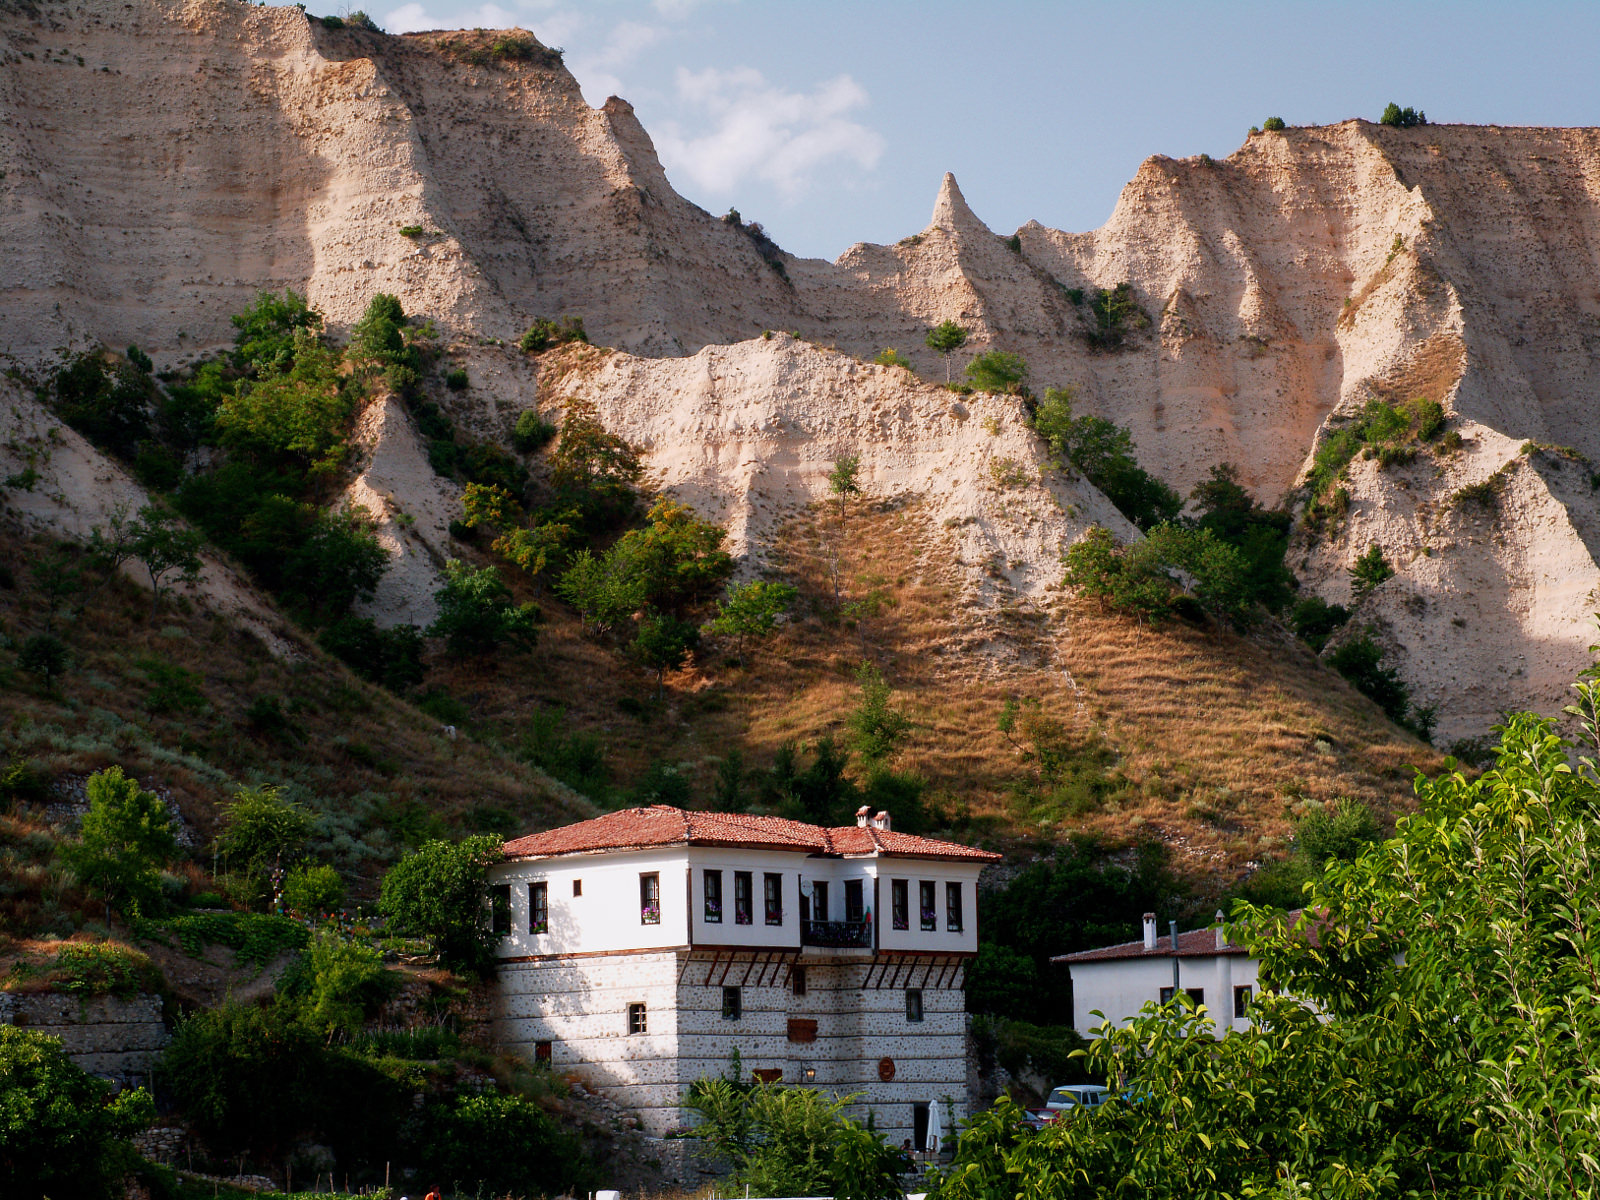 Bulgaria rocks: a hiker's guide to five geological wonders